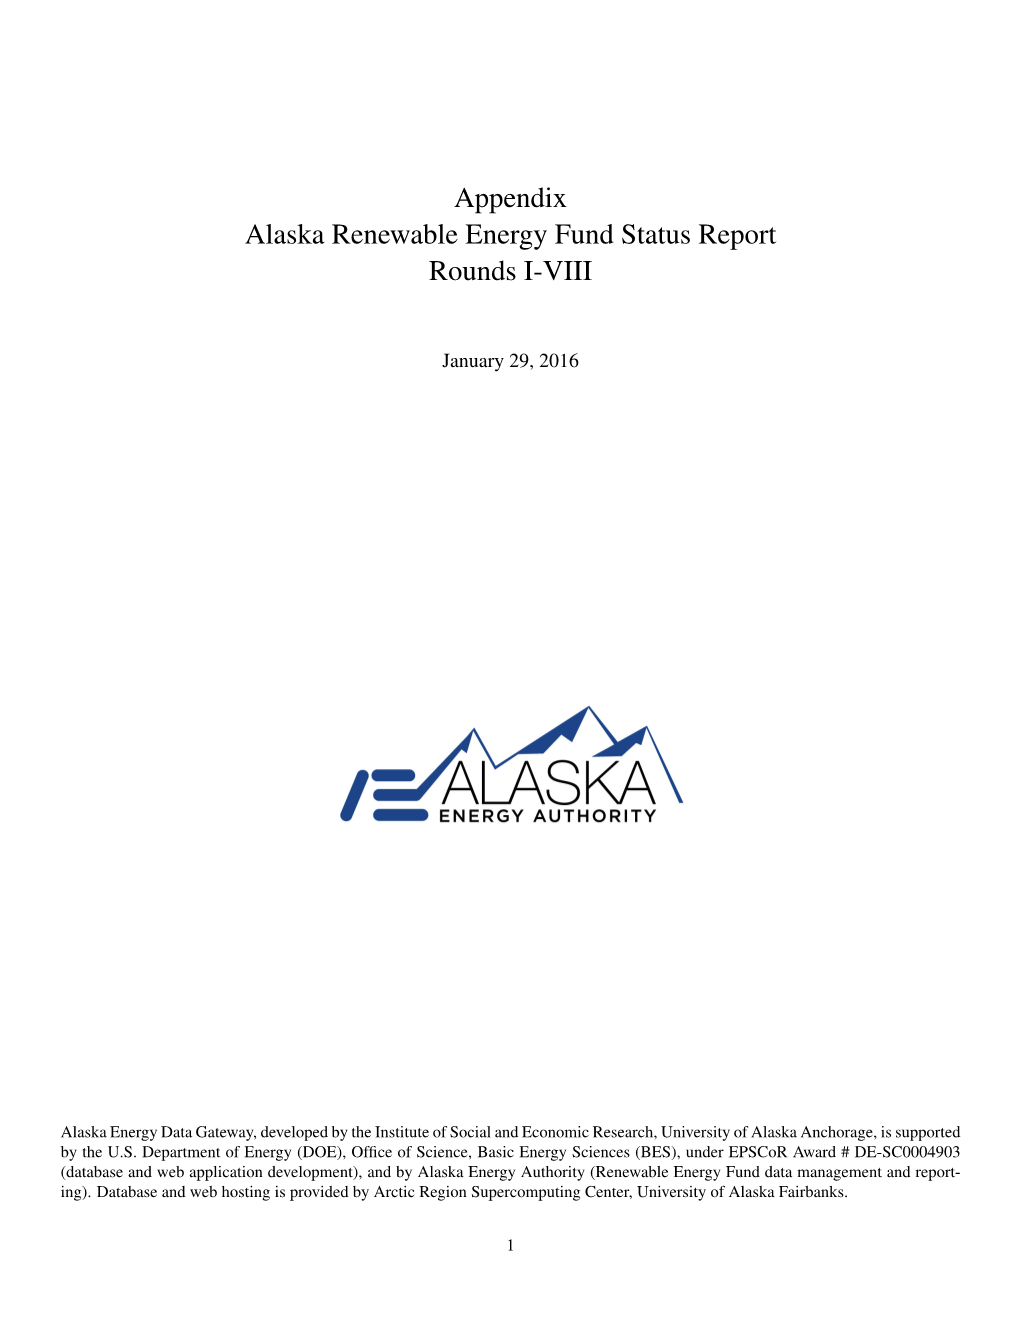 Appendix Alaska Renewable Energy Fund Status Report Rounds I-VIII